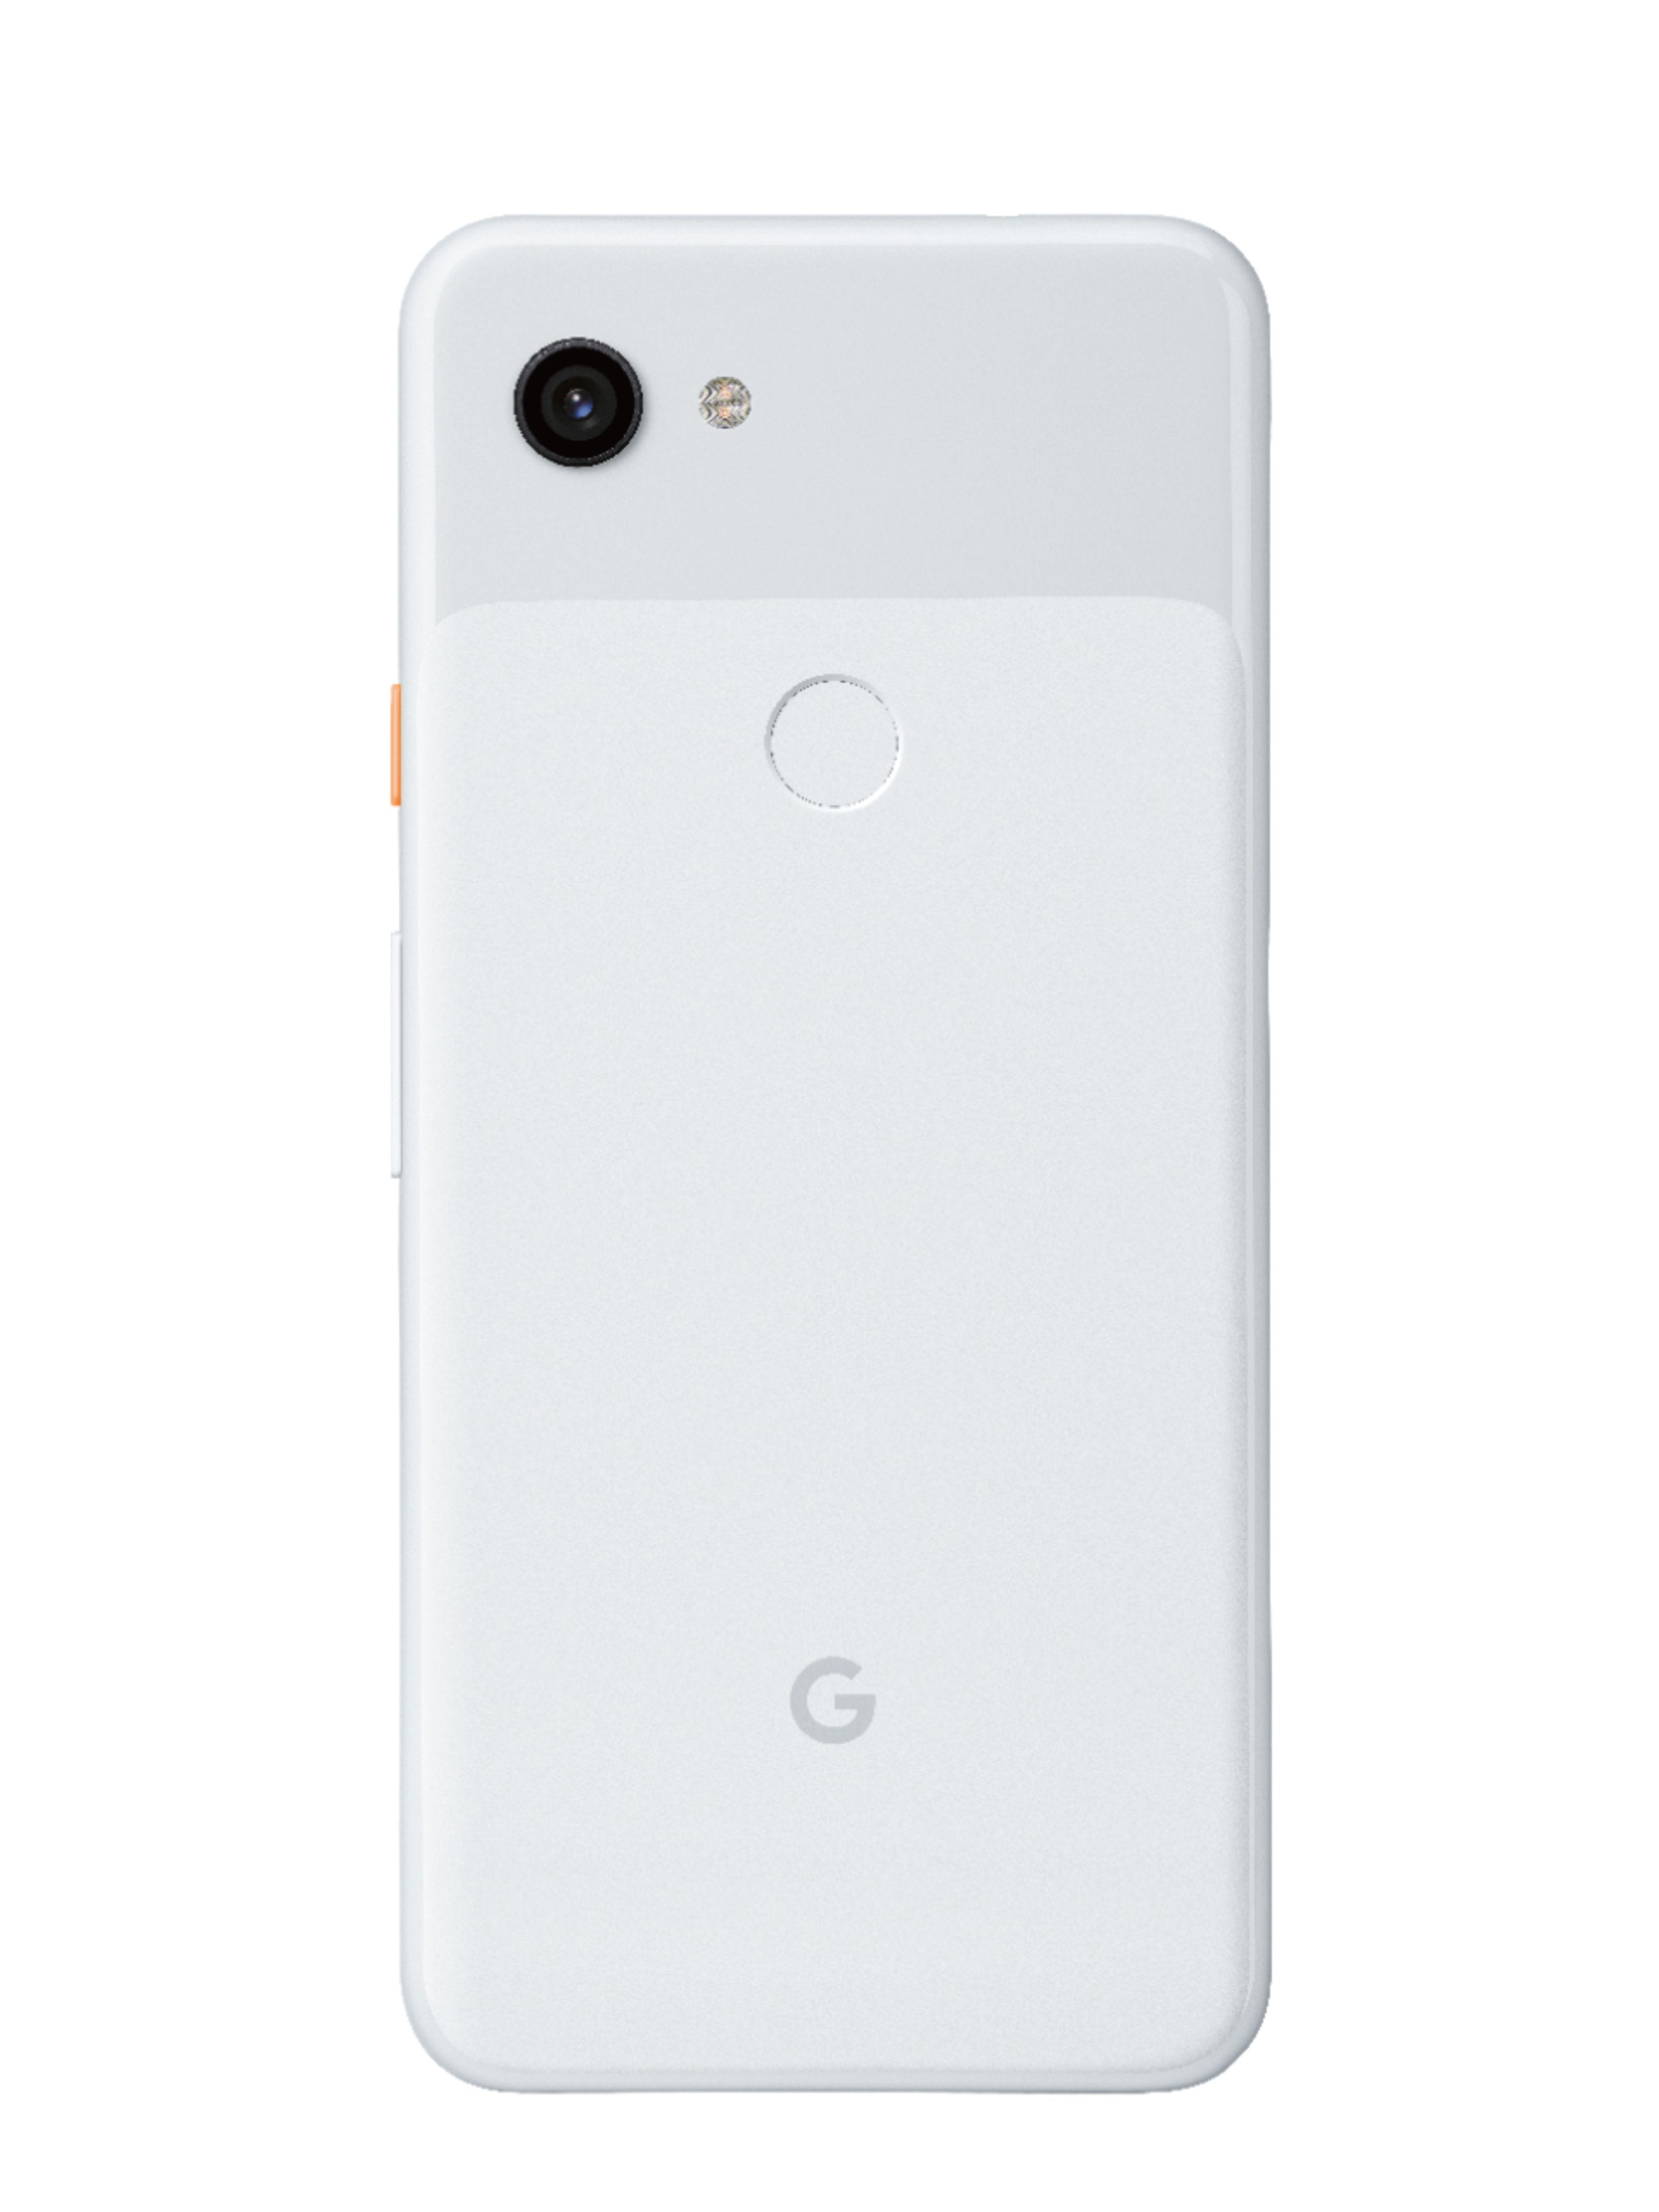 Google Pixel 3a XL Clearly White 64GB (Unlocked) - Plug.tech